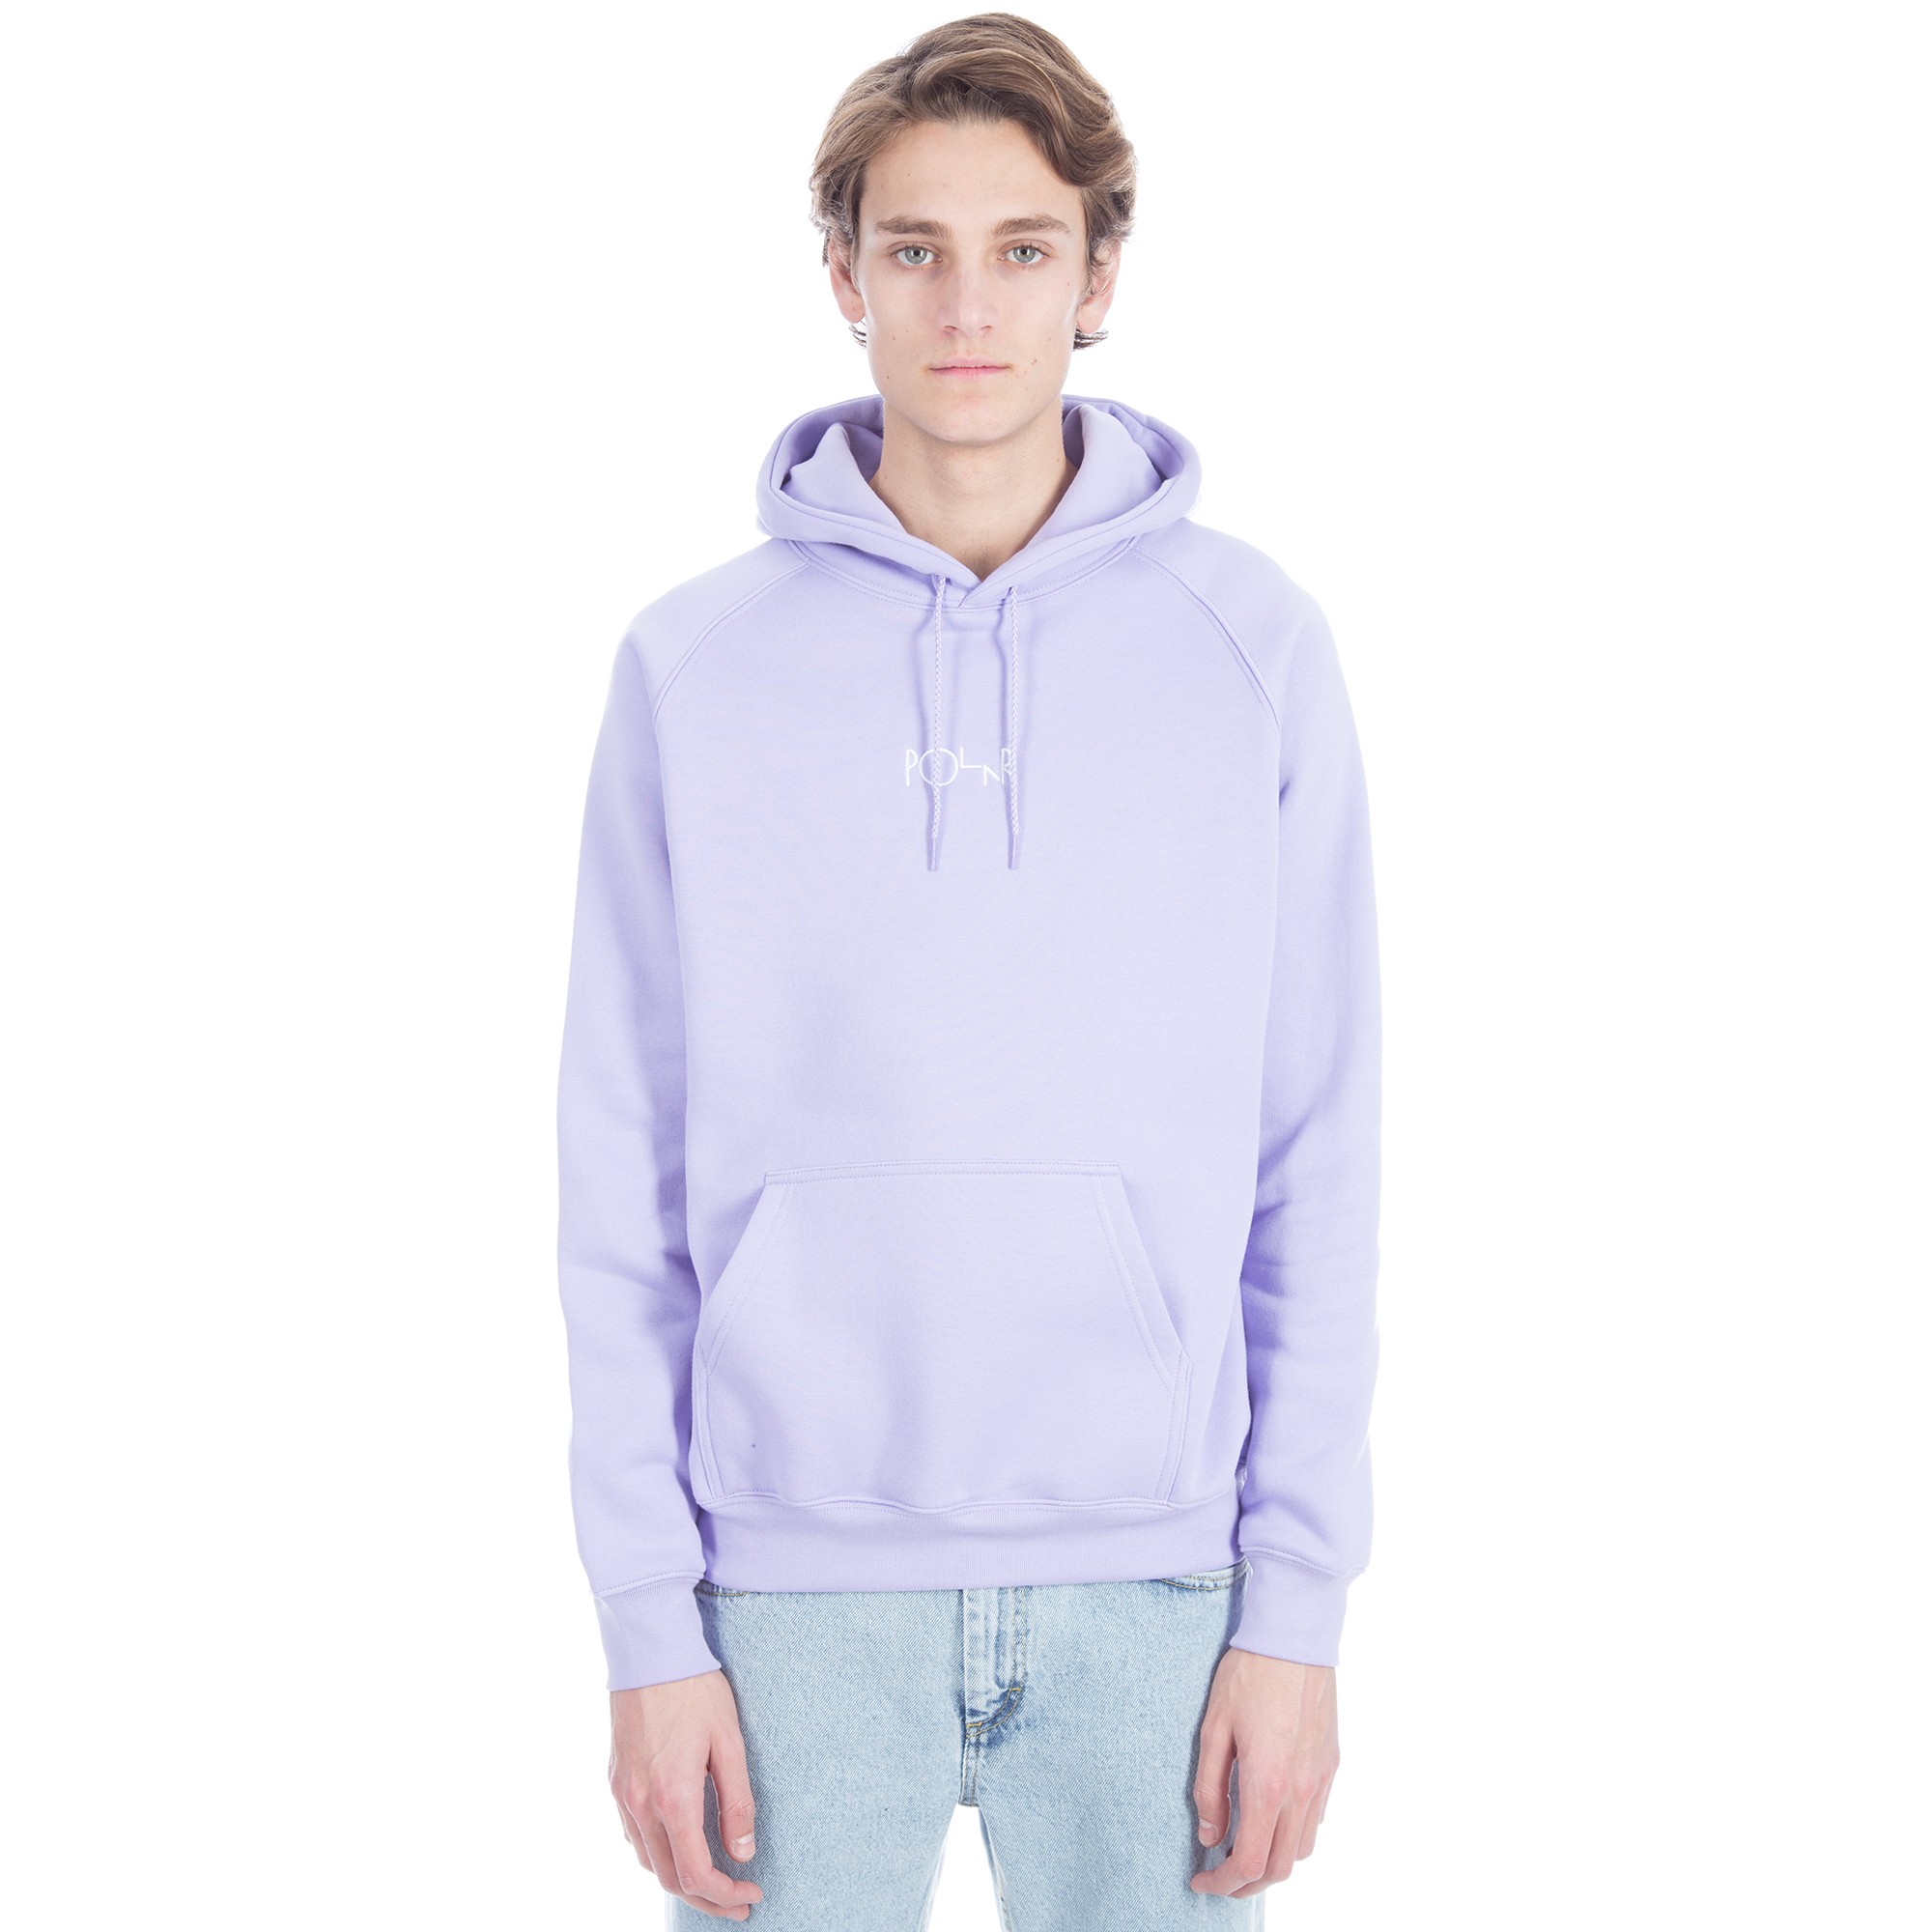 Polar Default Pullover Hooded Sweatshirt (Lavender) - Consortium.